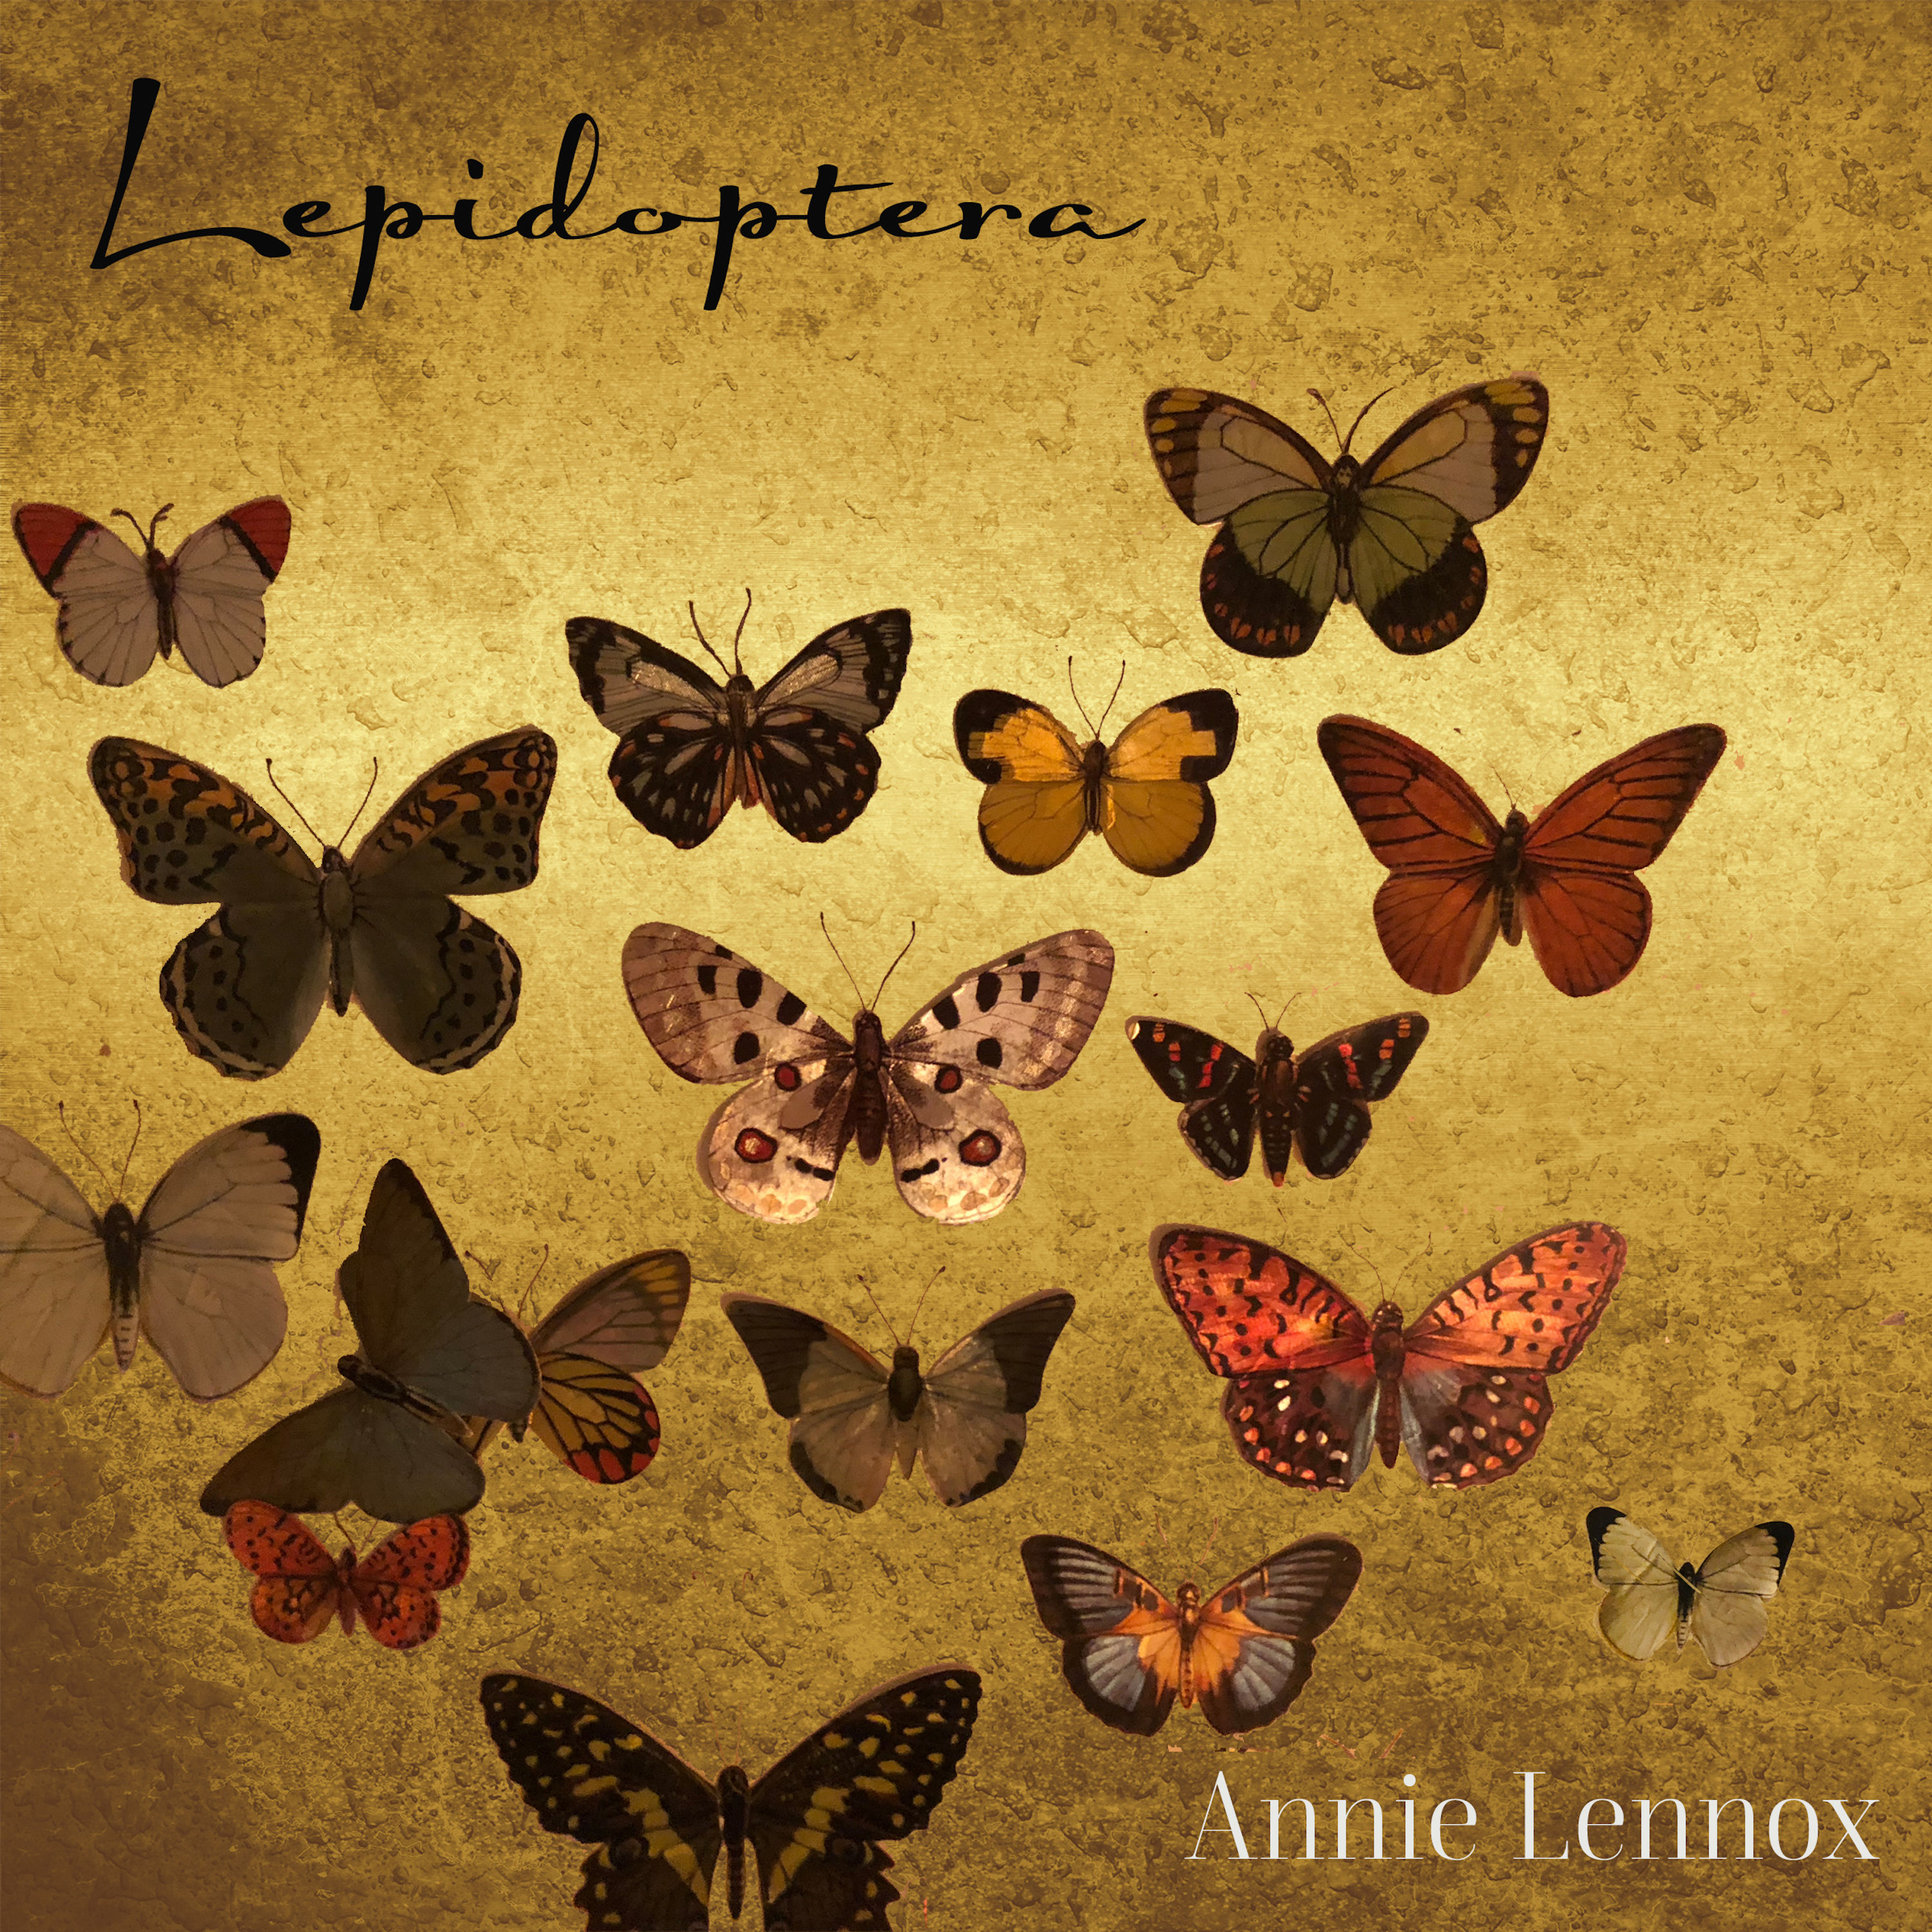 Annie Lennox - Lepidoptera (2019) [FLAC 24bit/48kHz]